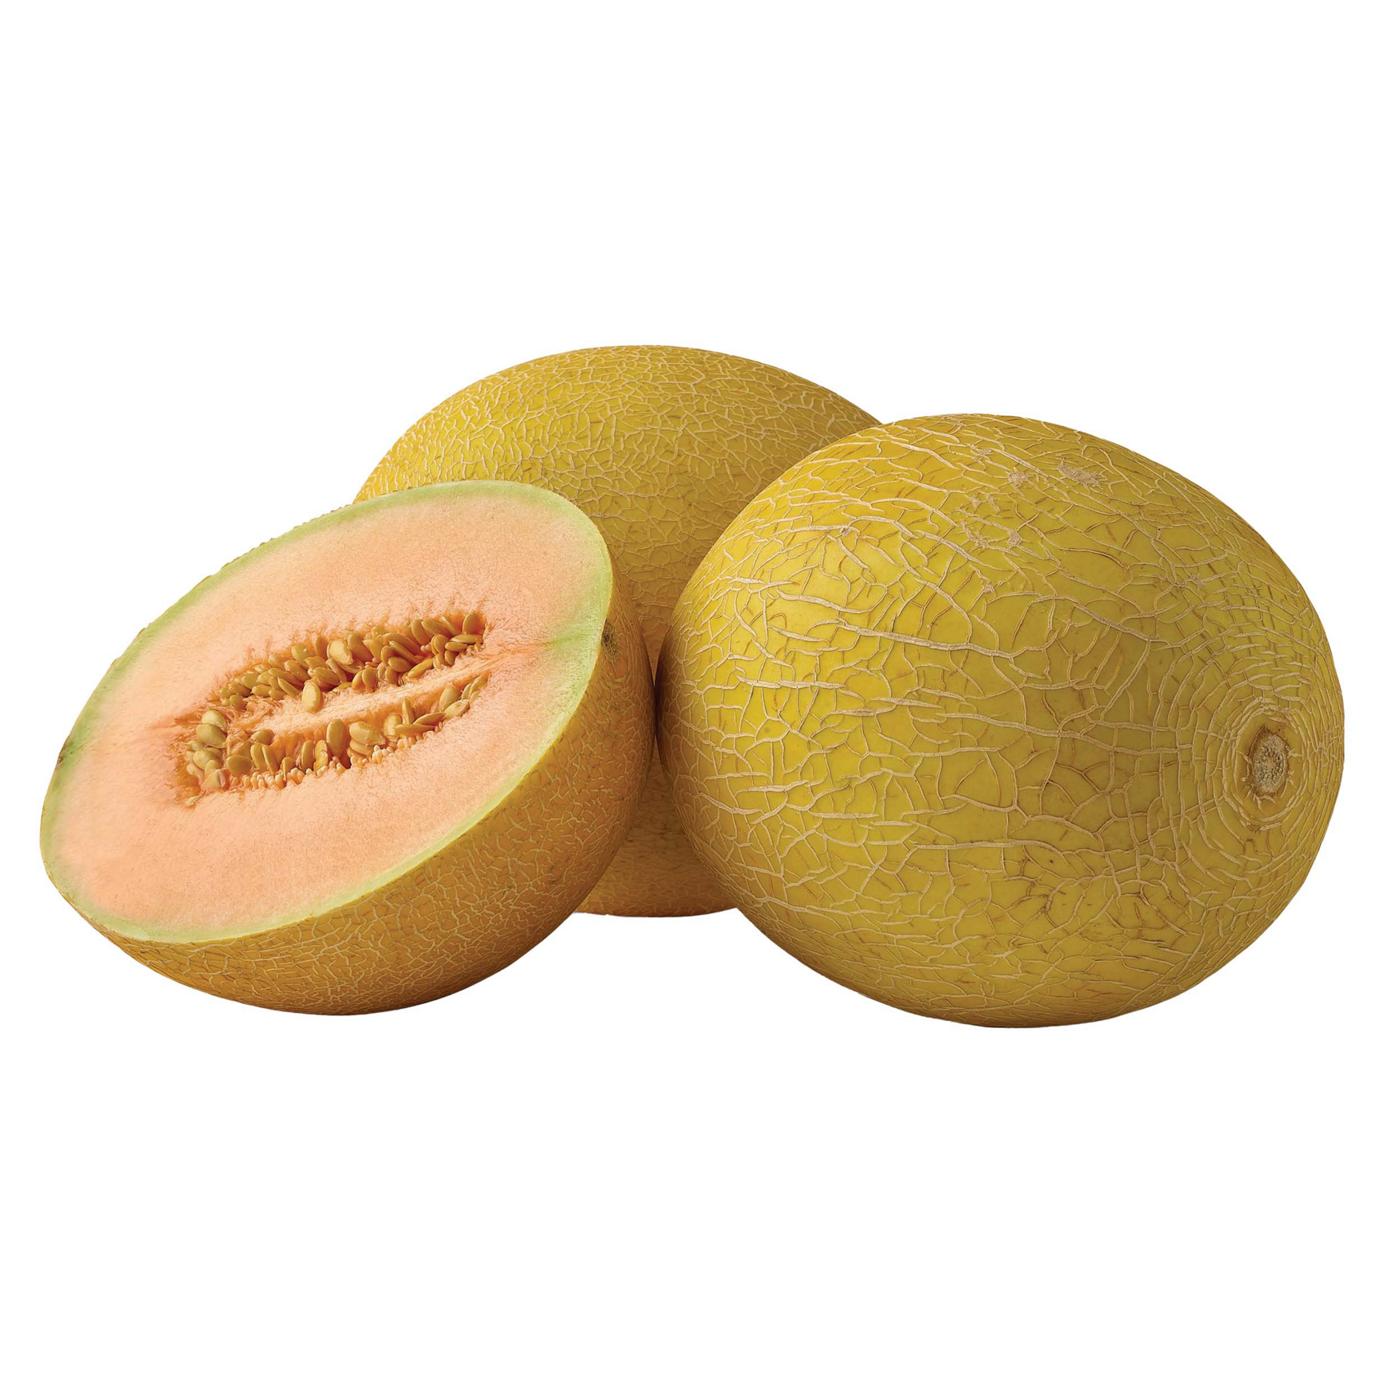 H-E-B Texas Roots Fresh Golden Crush Cantaloupe; image 2 of 2